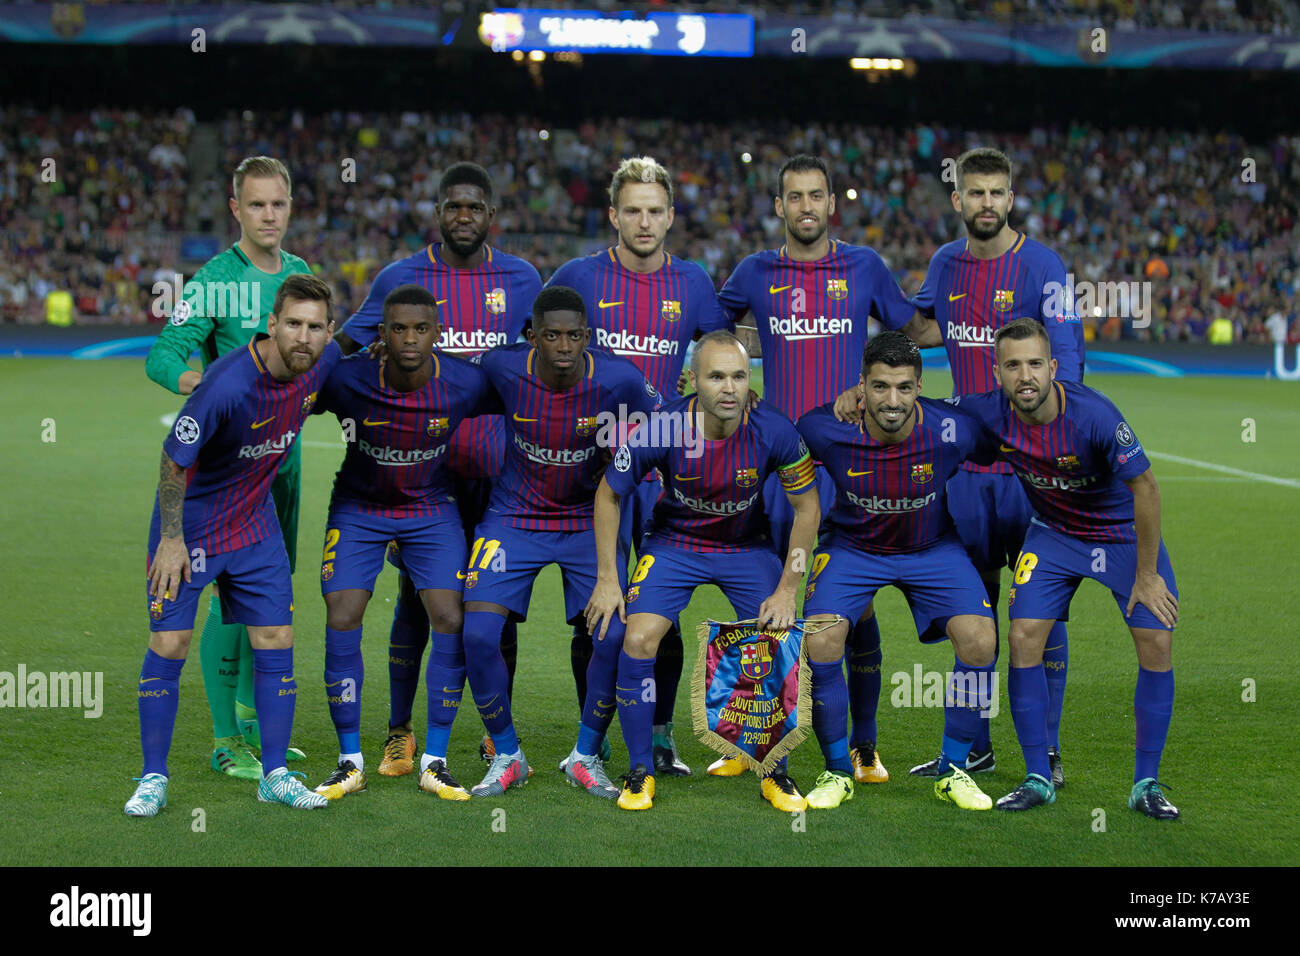 uefa champions league fc barcelona